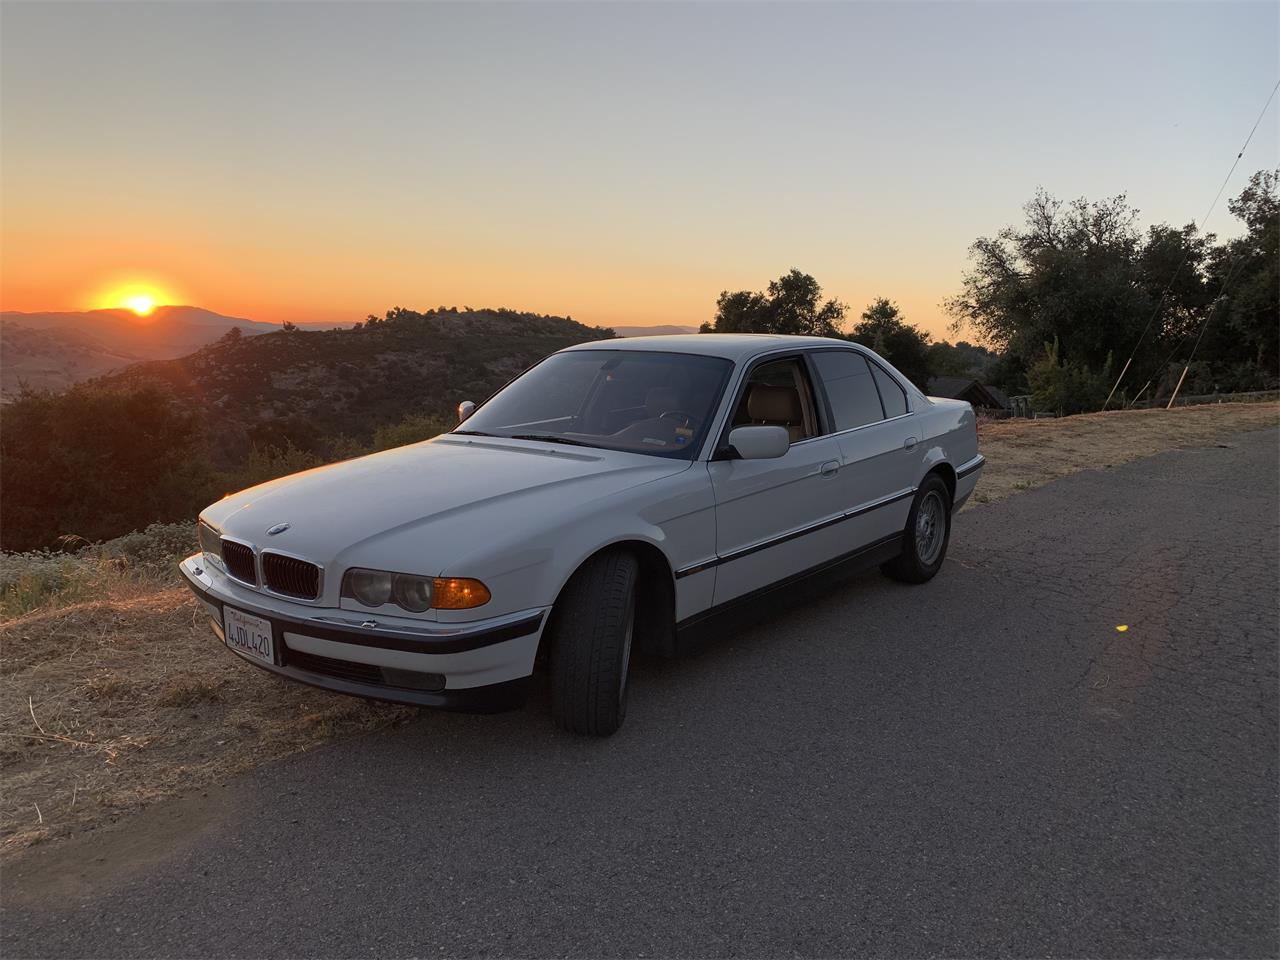 2000 BMW 740i for sale in Santa Ysabel, CA